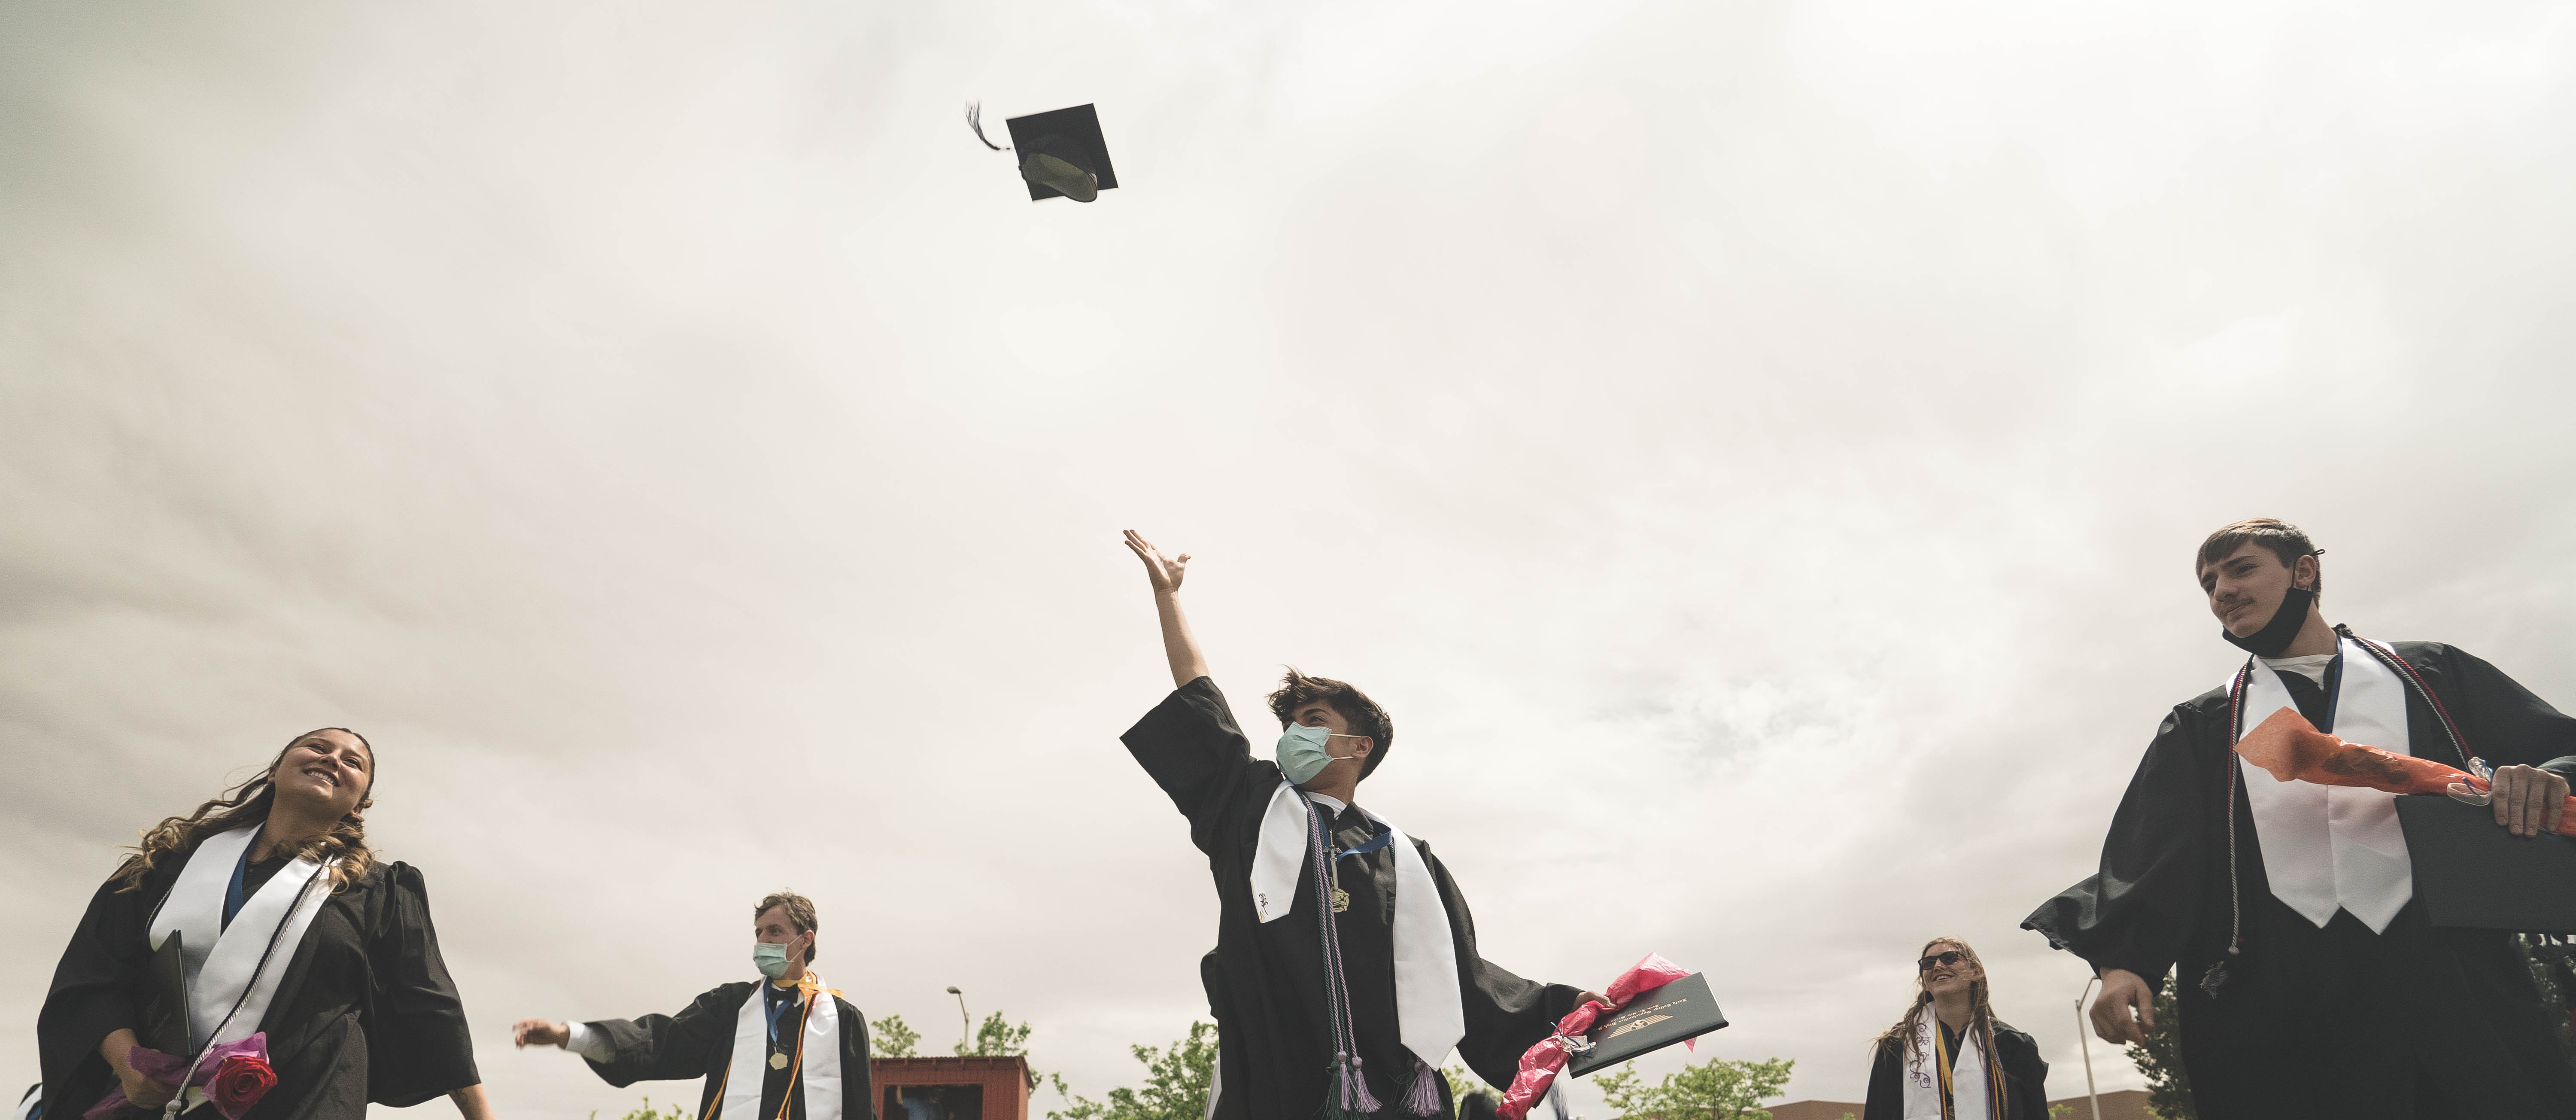 ECO Student throwing Graduation cap